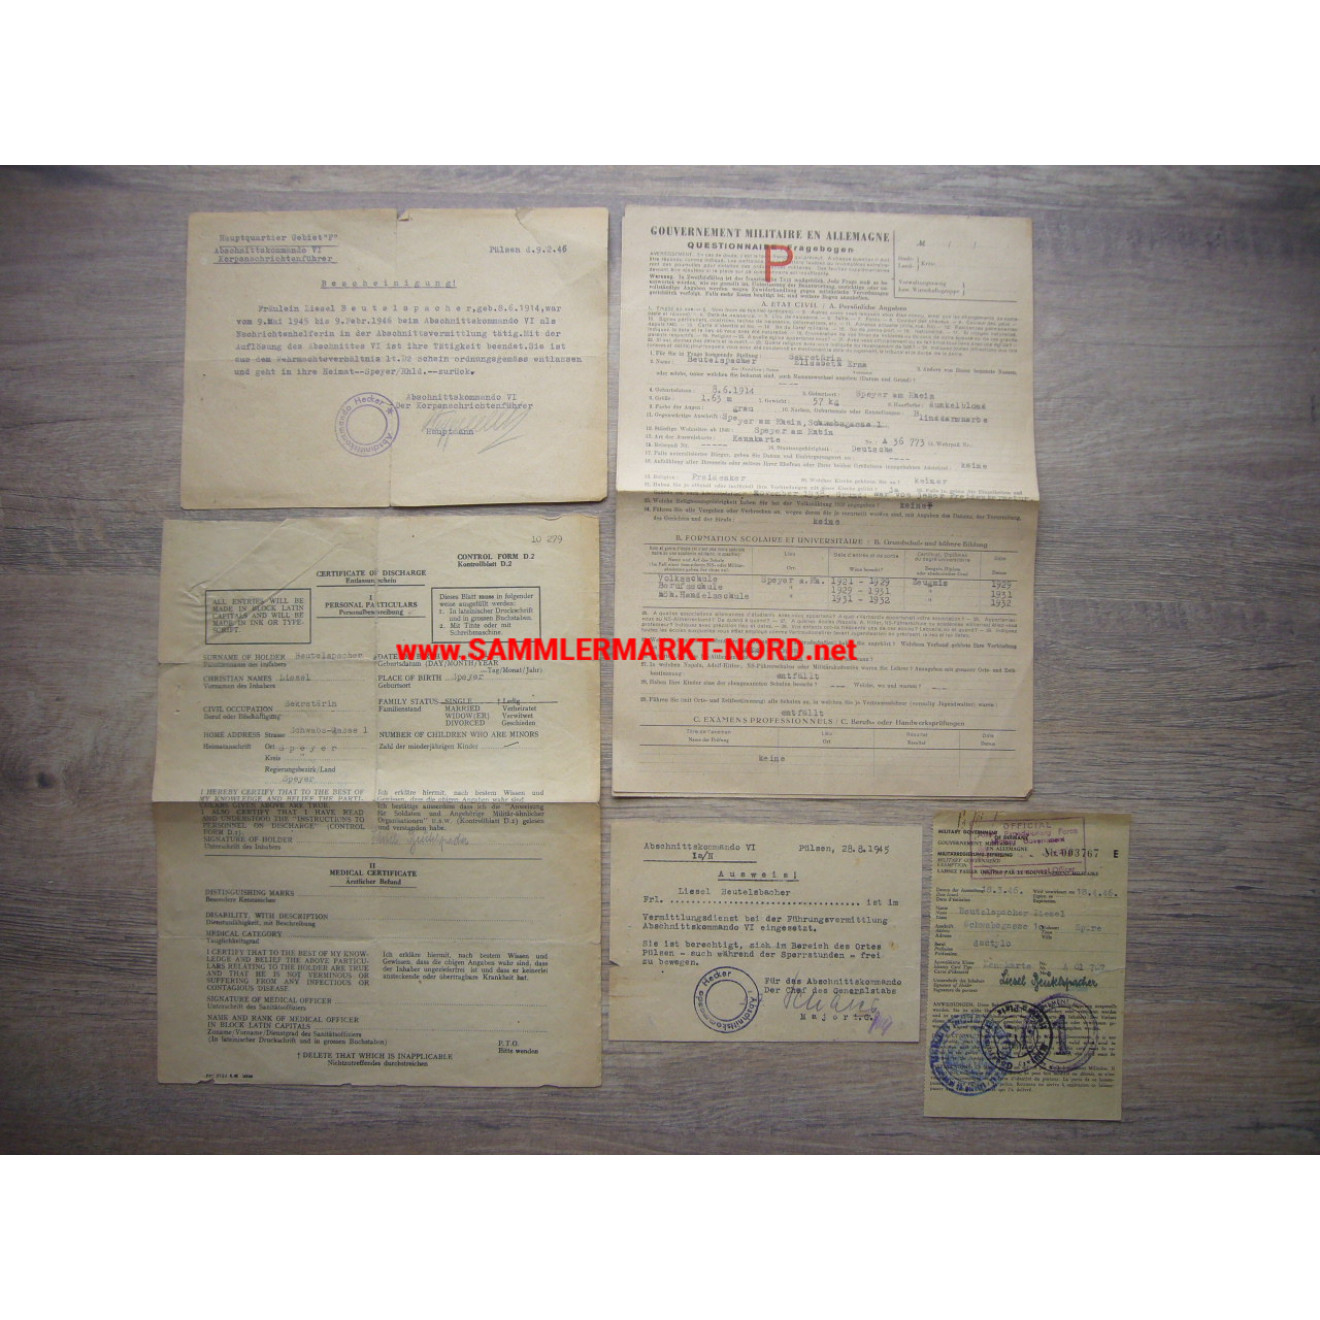 Section Command VI (Hecker) - Pülsen 1945 - Documents of an intelligence officer